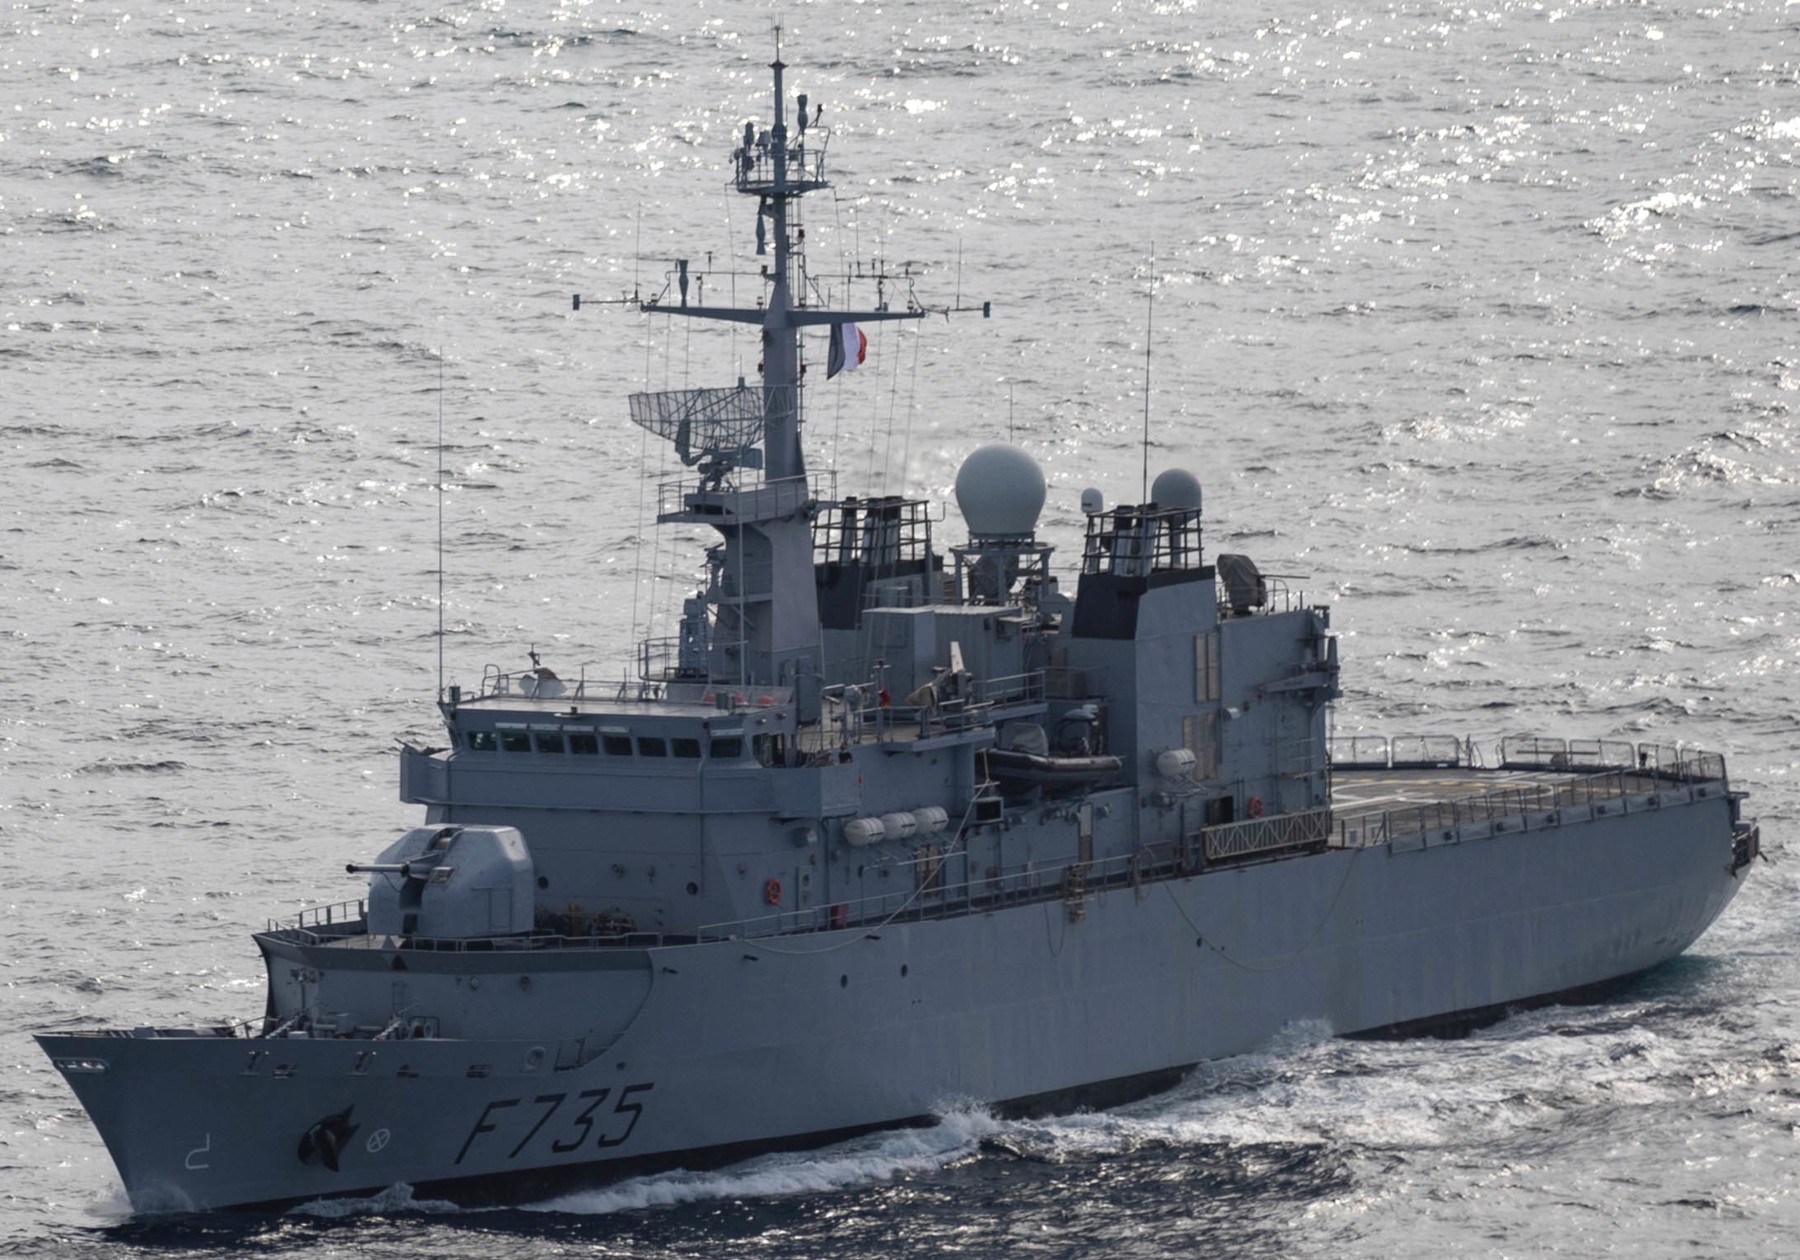 f-735 fs germinal floreal class frigate french navy marine nationale fregate de surveillance 19